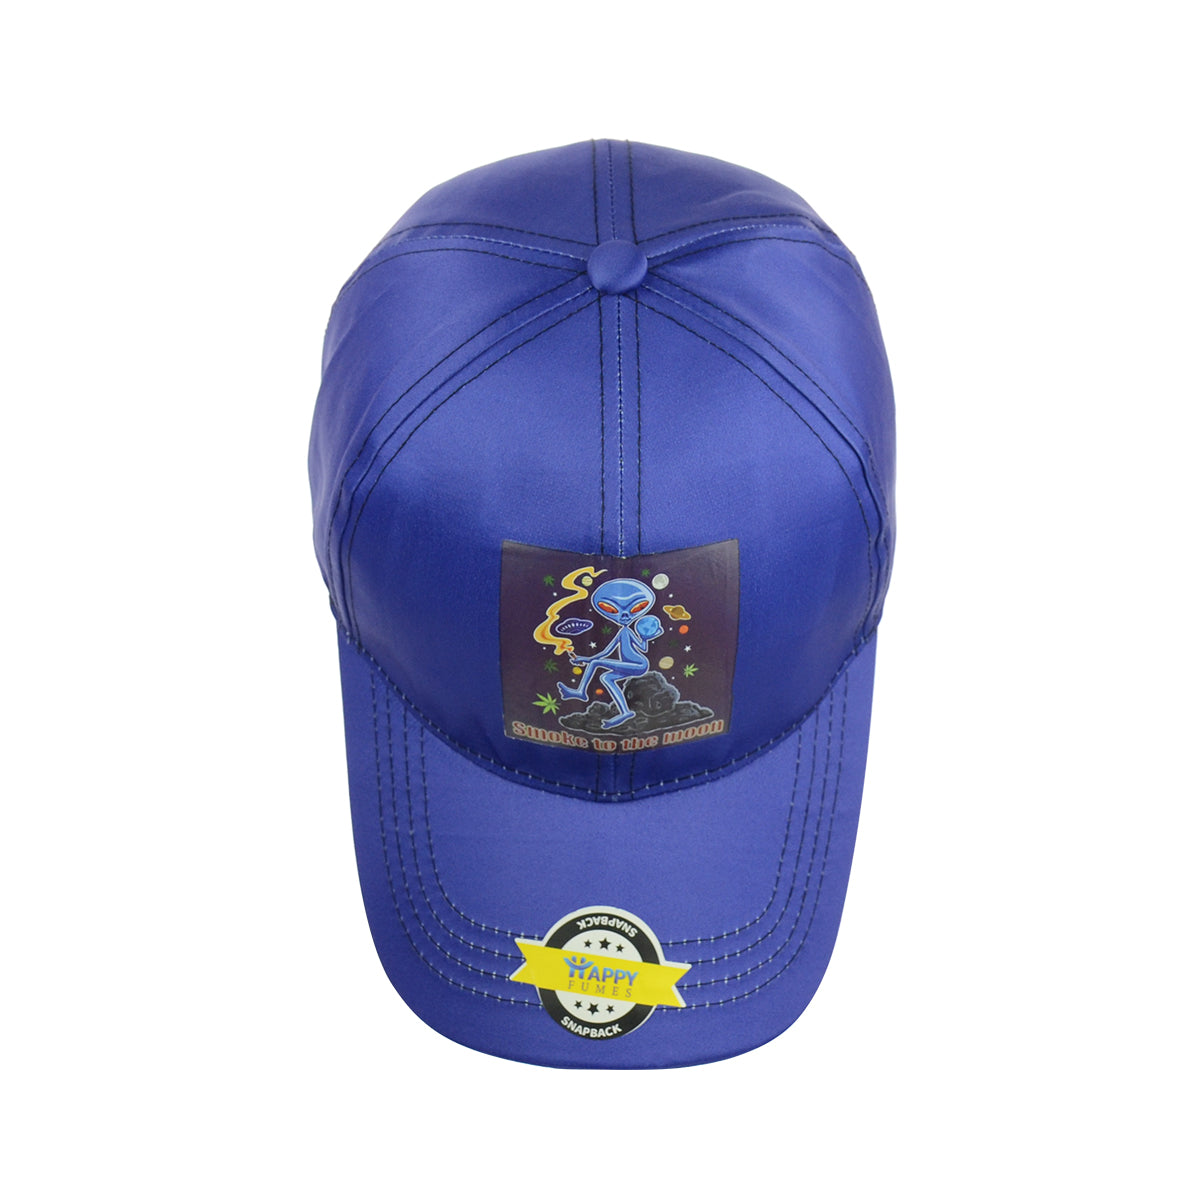 Smoke To The Moon Design Navy Blue Baseball Snapback Hat